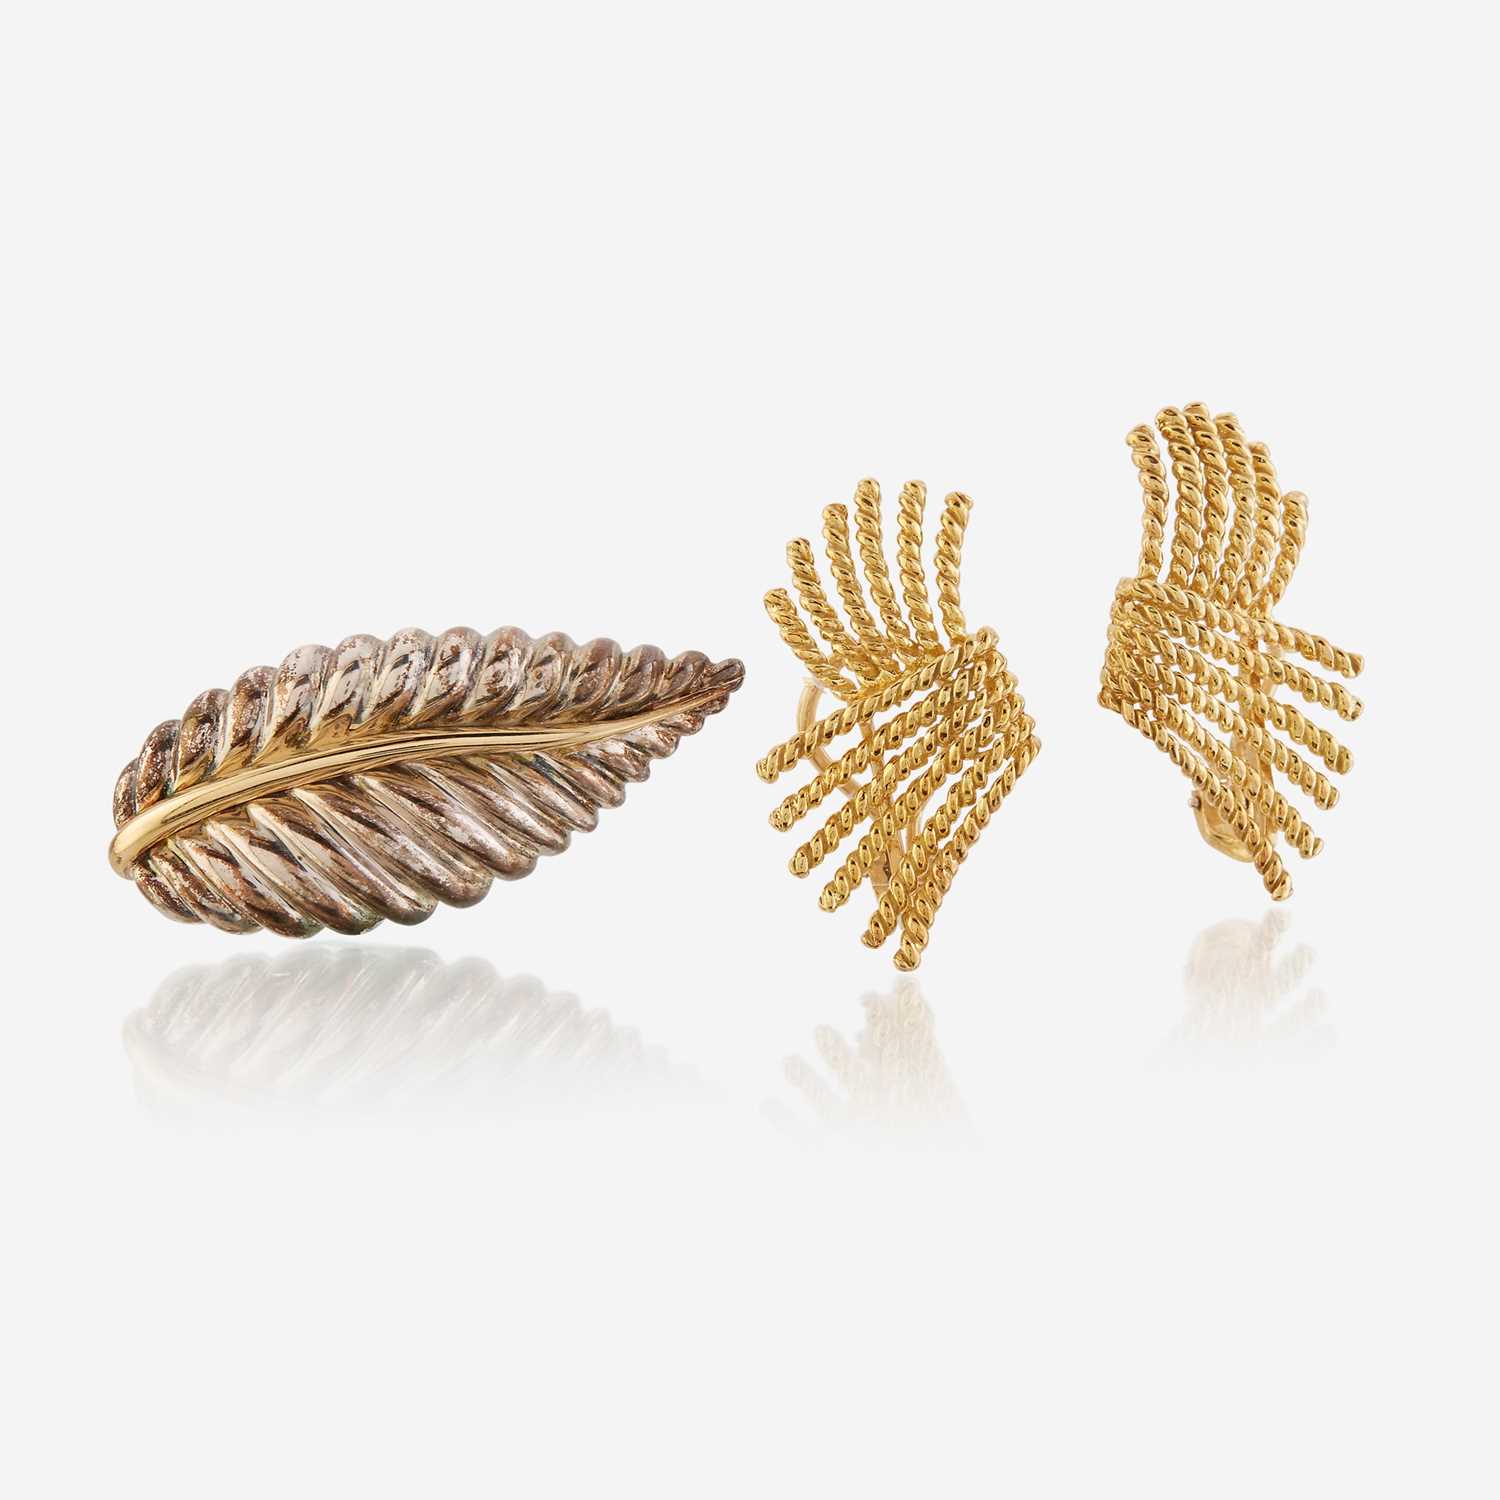 Lot 106 - A pair of eighteen karat gold ear clips and a sterling silver and eighteen karat gold brooch, Tiffany & Co.